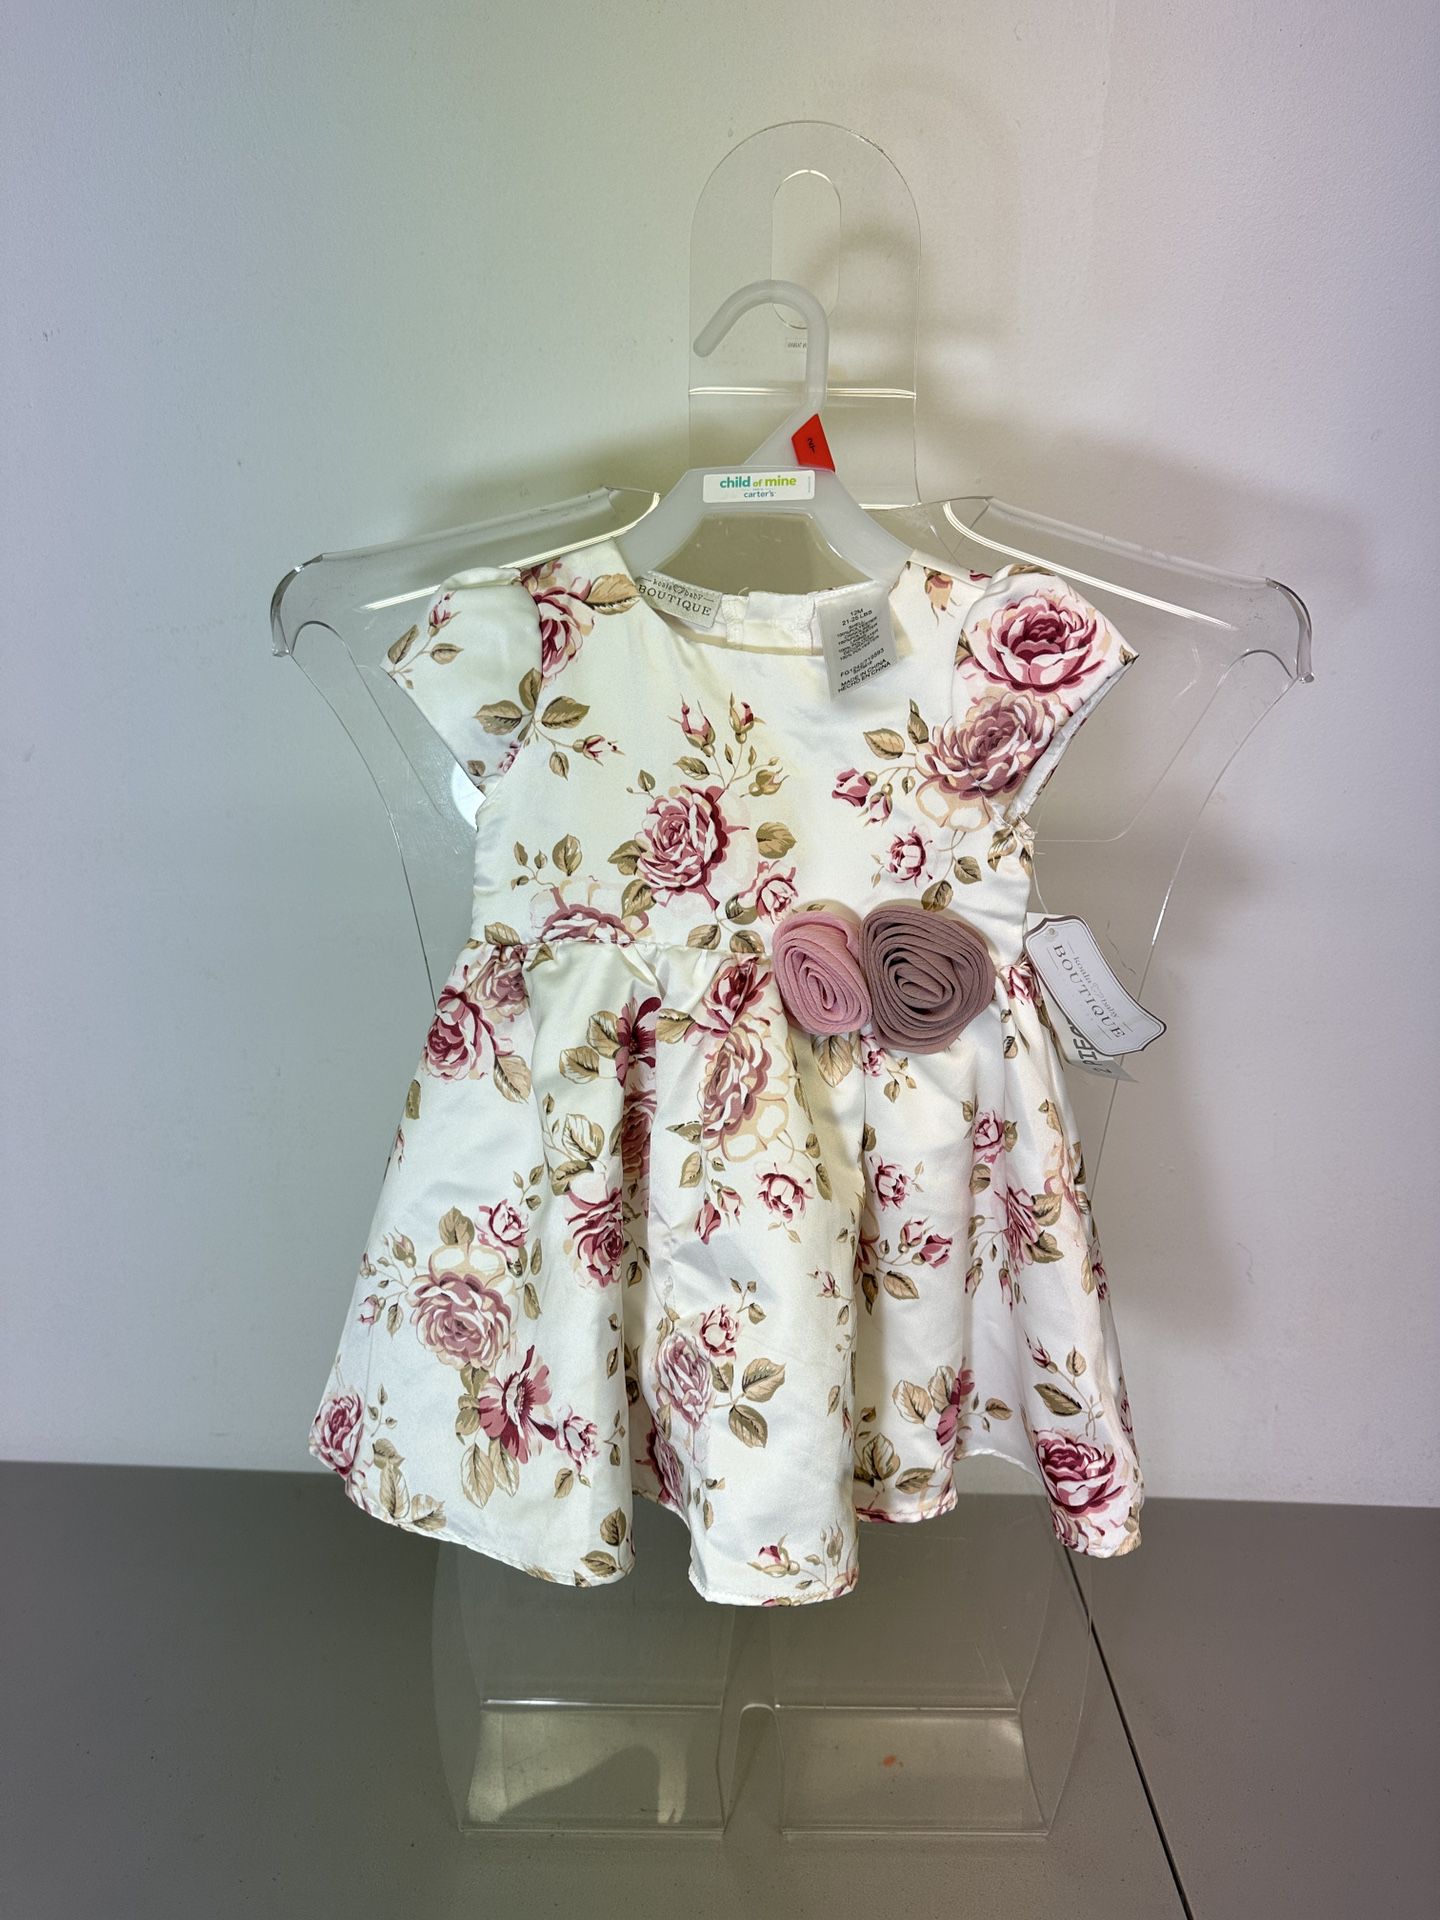 NEW Koala 12M Baby Girls Dress Floral Short Sleeve Pink/White